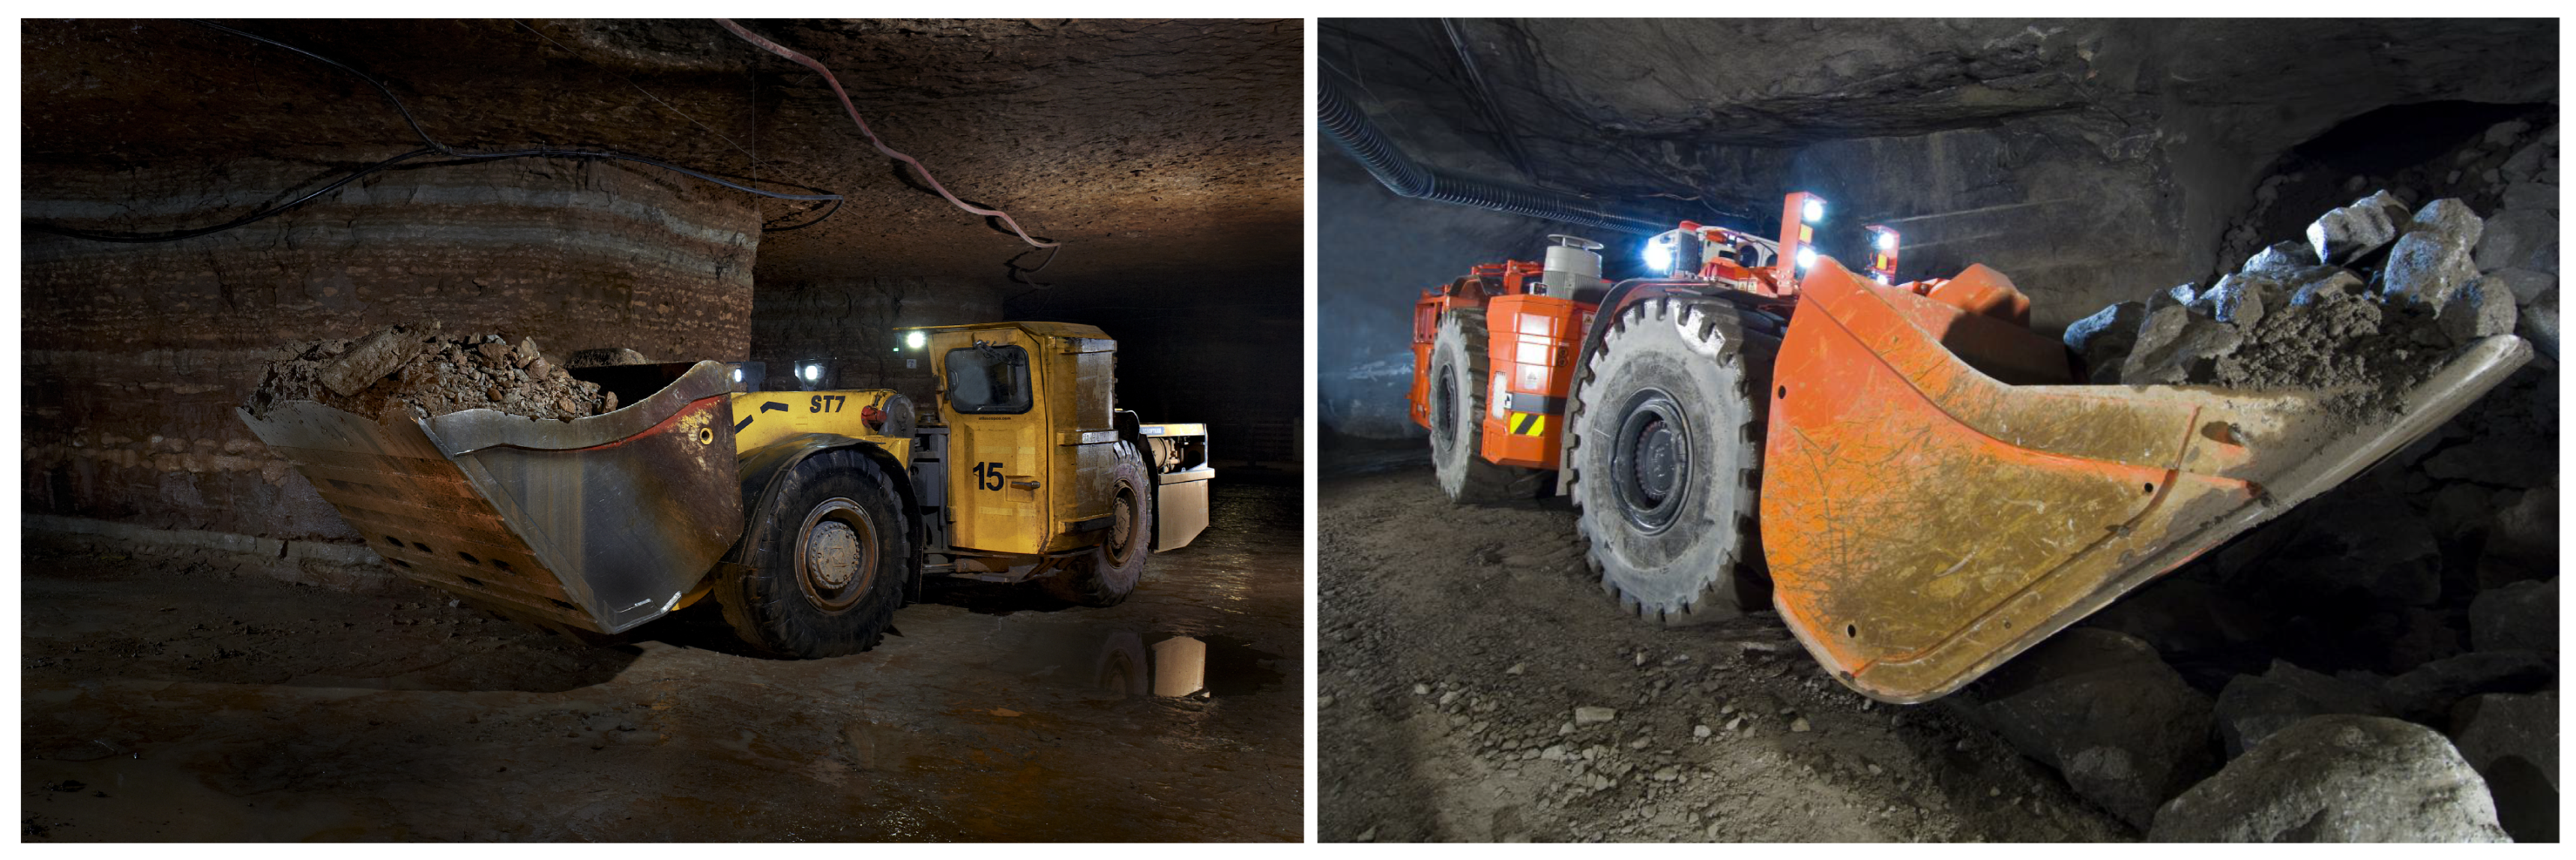 Alpha helps underground coal mines improve equipment intelligent